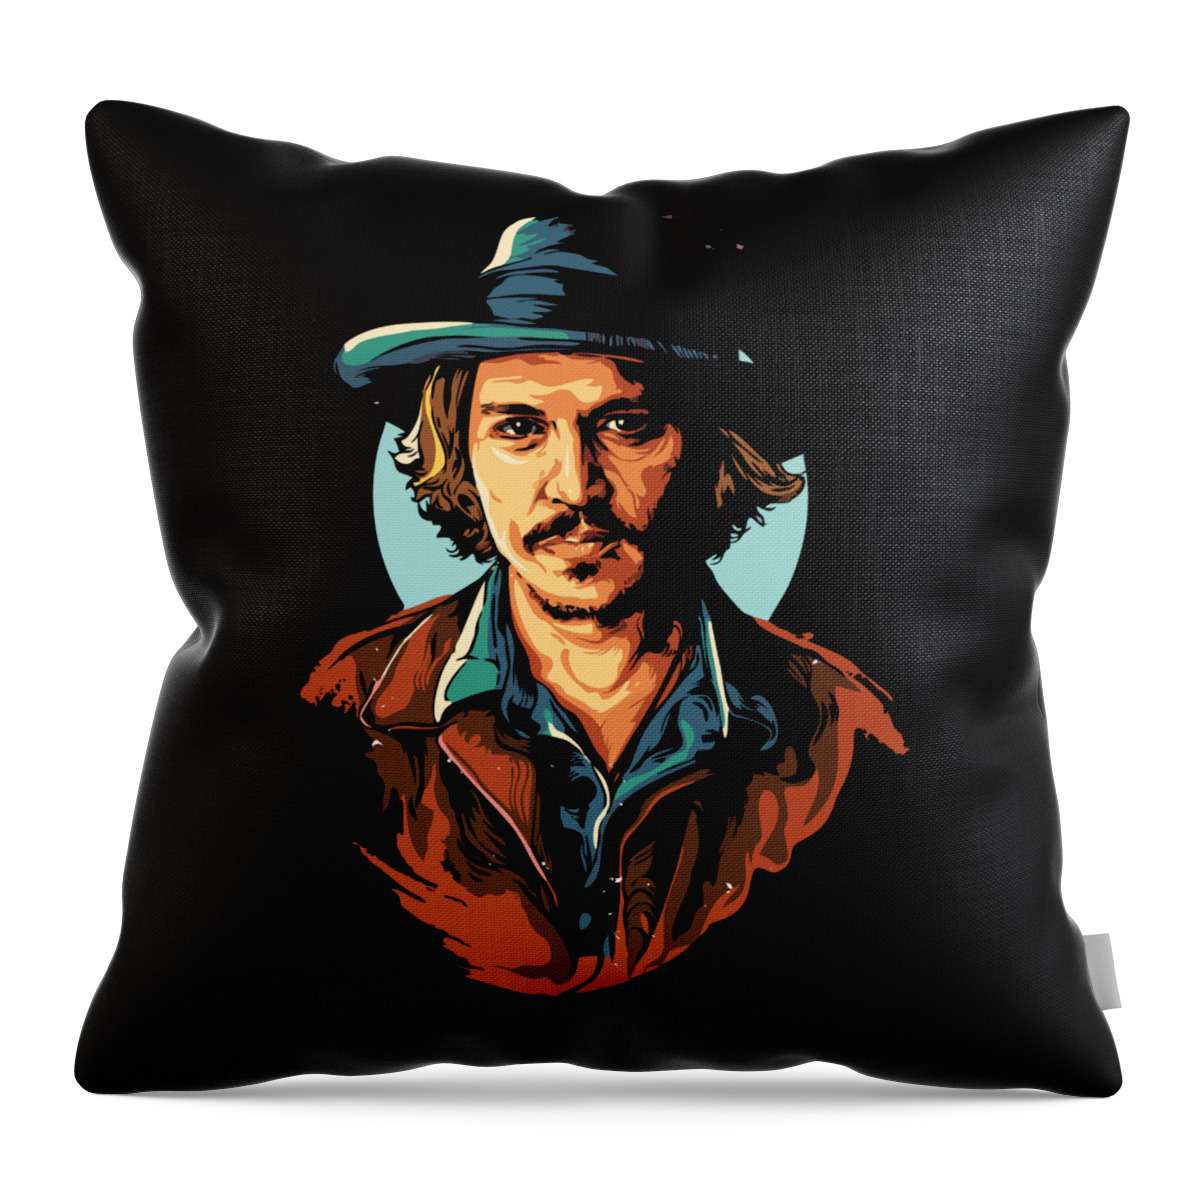  Johnny Depp Throw Pillow featuring the digital art Johnny Depp 1 by Adrian Purdy